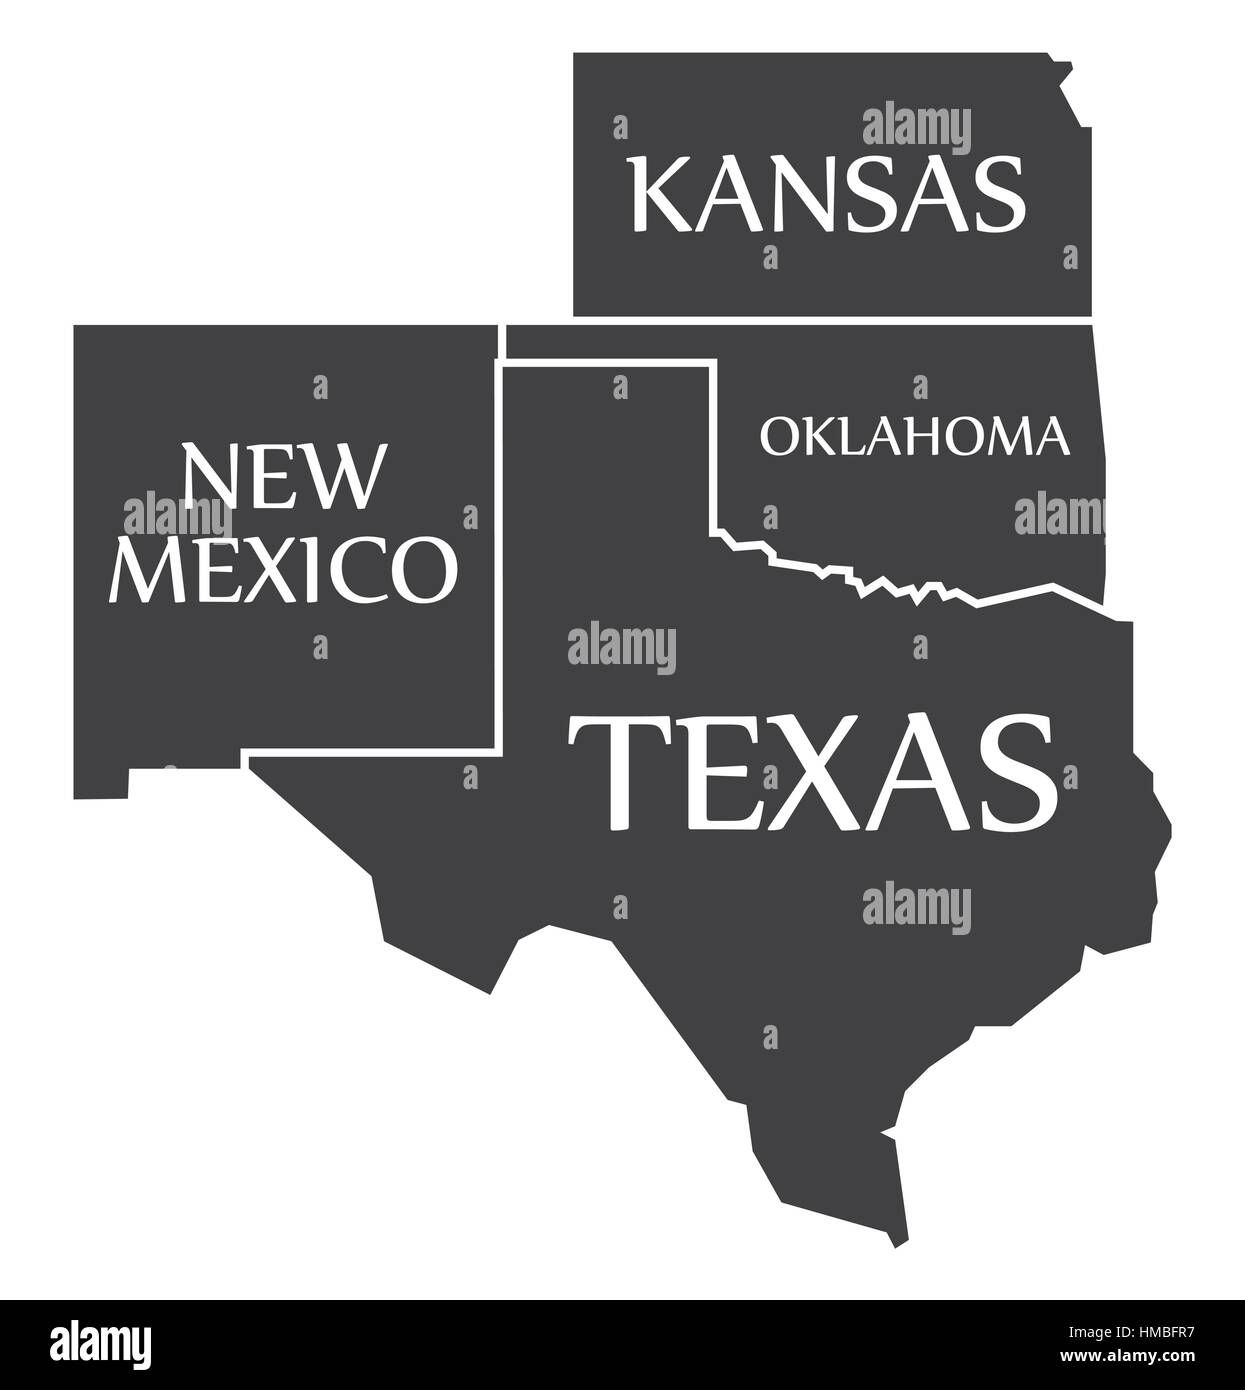 New Mexico - Kansas - Oklahoma - Texas labelled black illustration Stock Vector